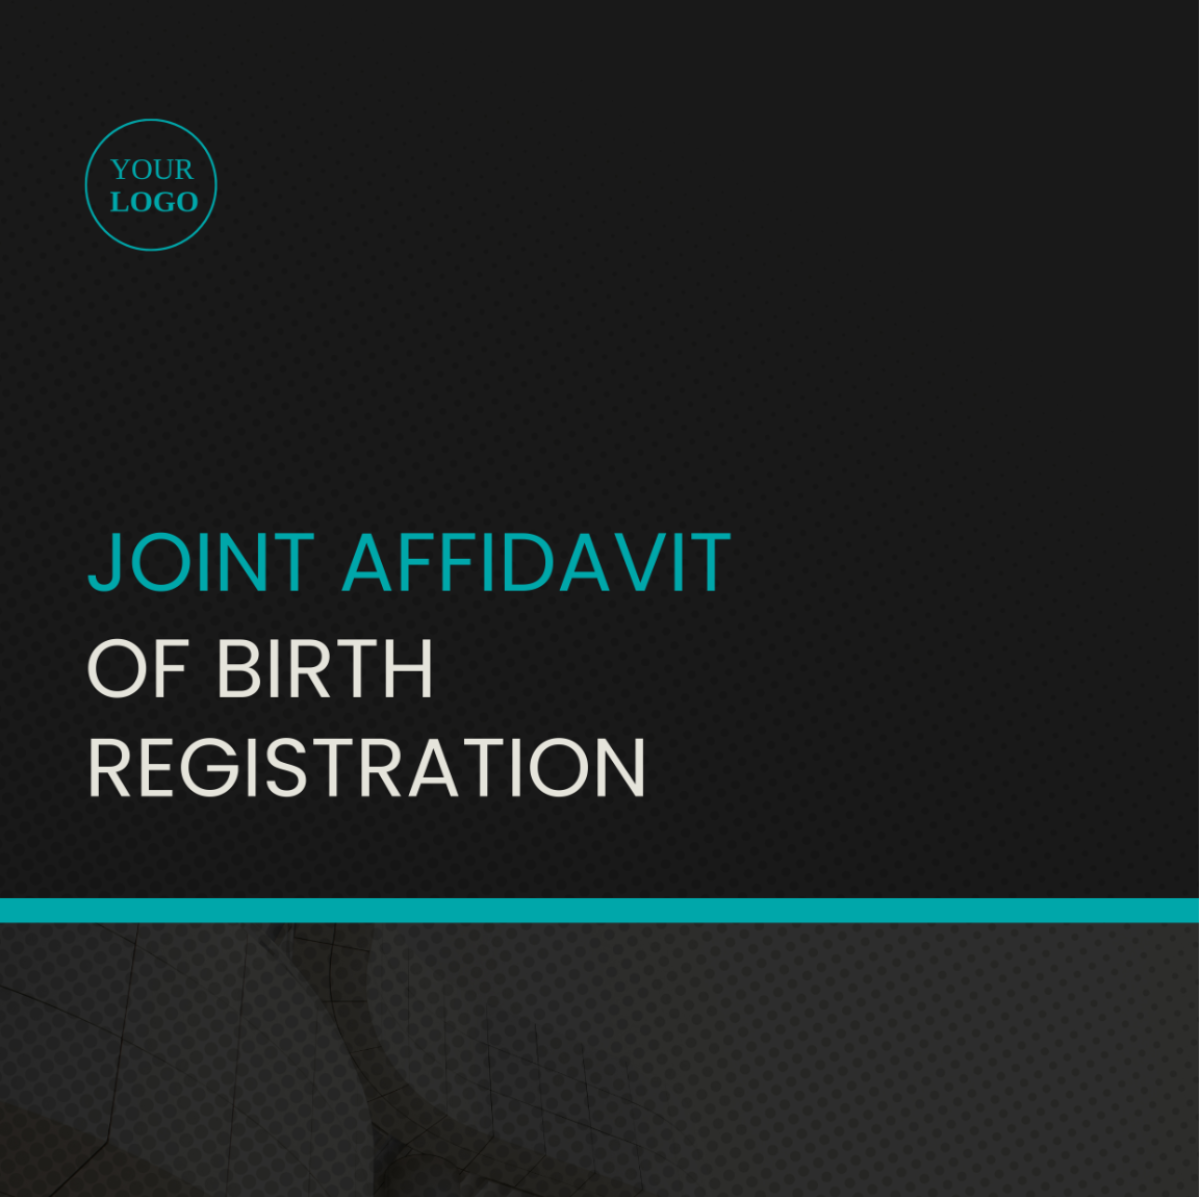 Joint Affidavit of Birth Registration Template